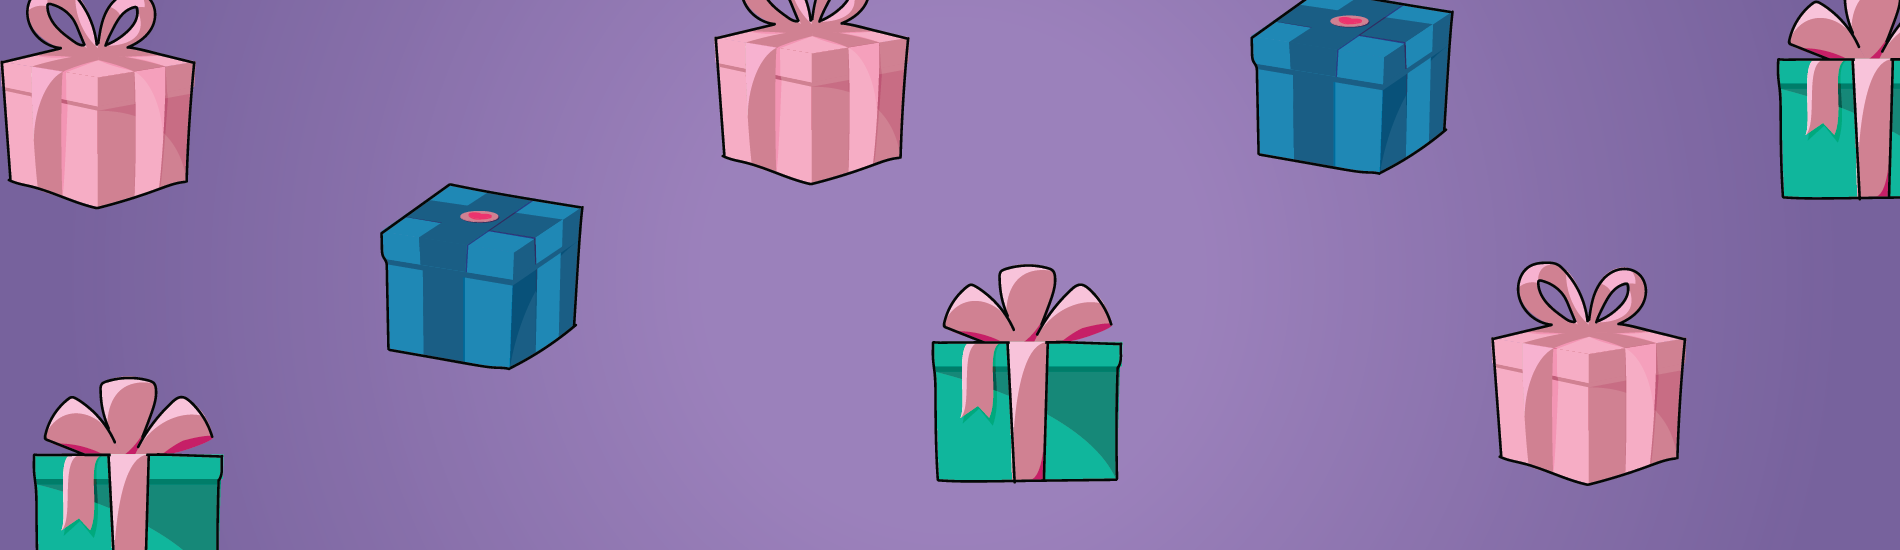 Mother’s Day Gift Ideas Blog Illustration